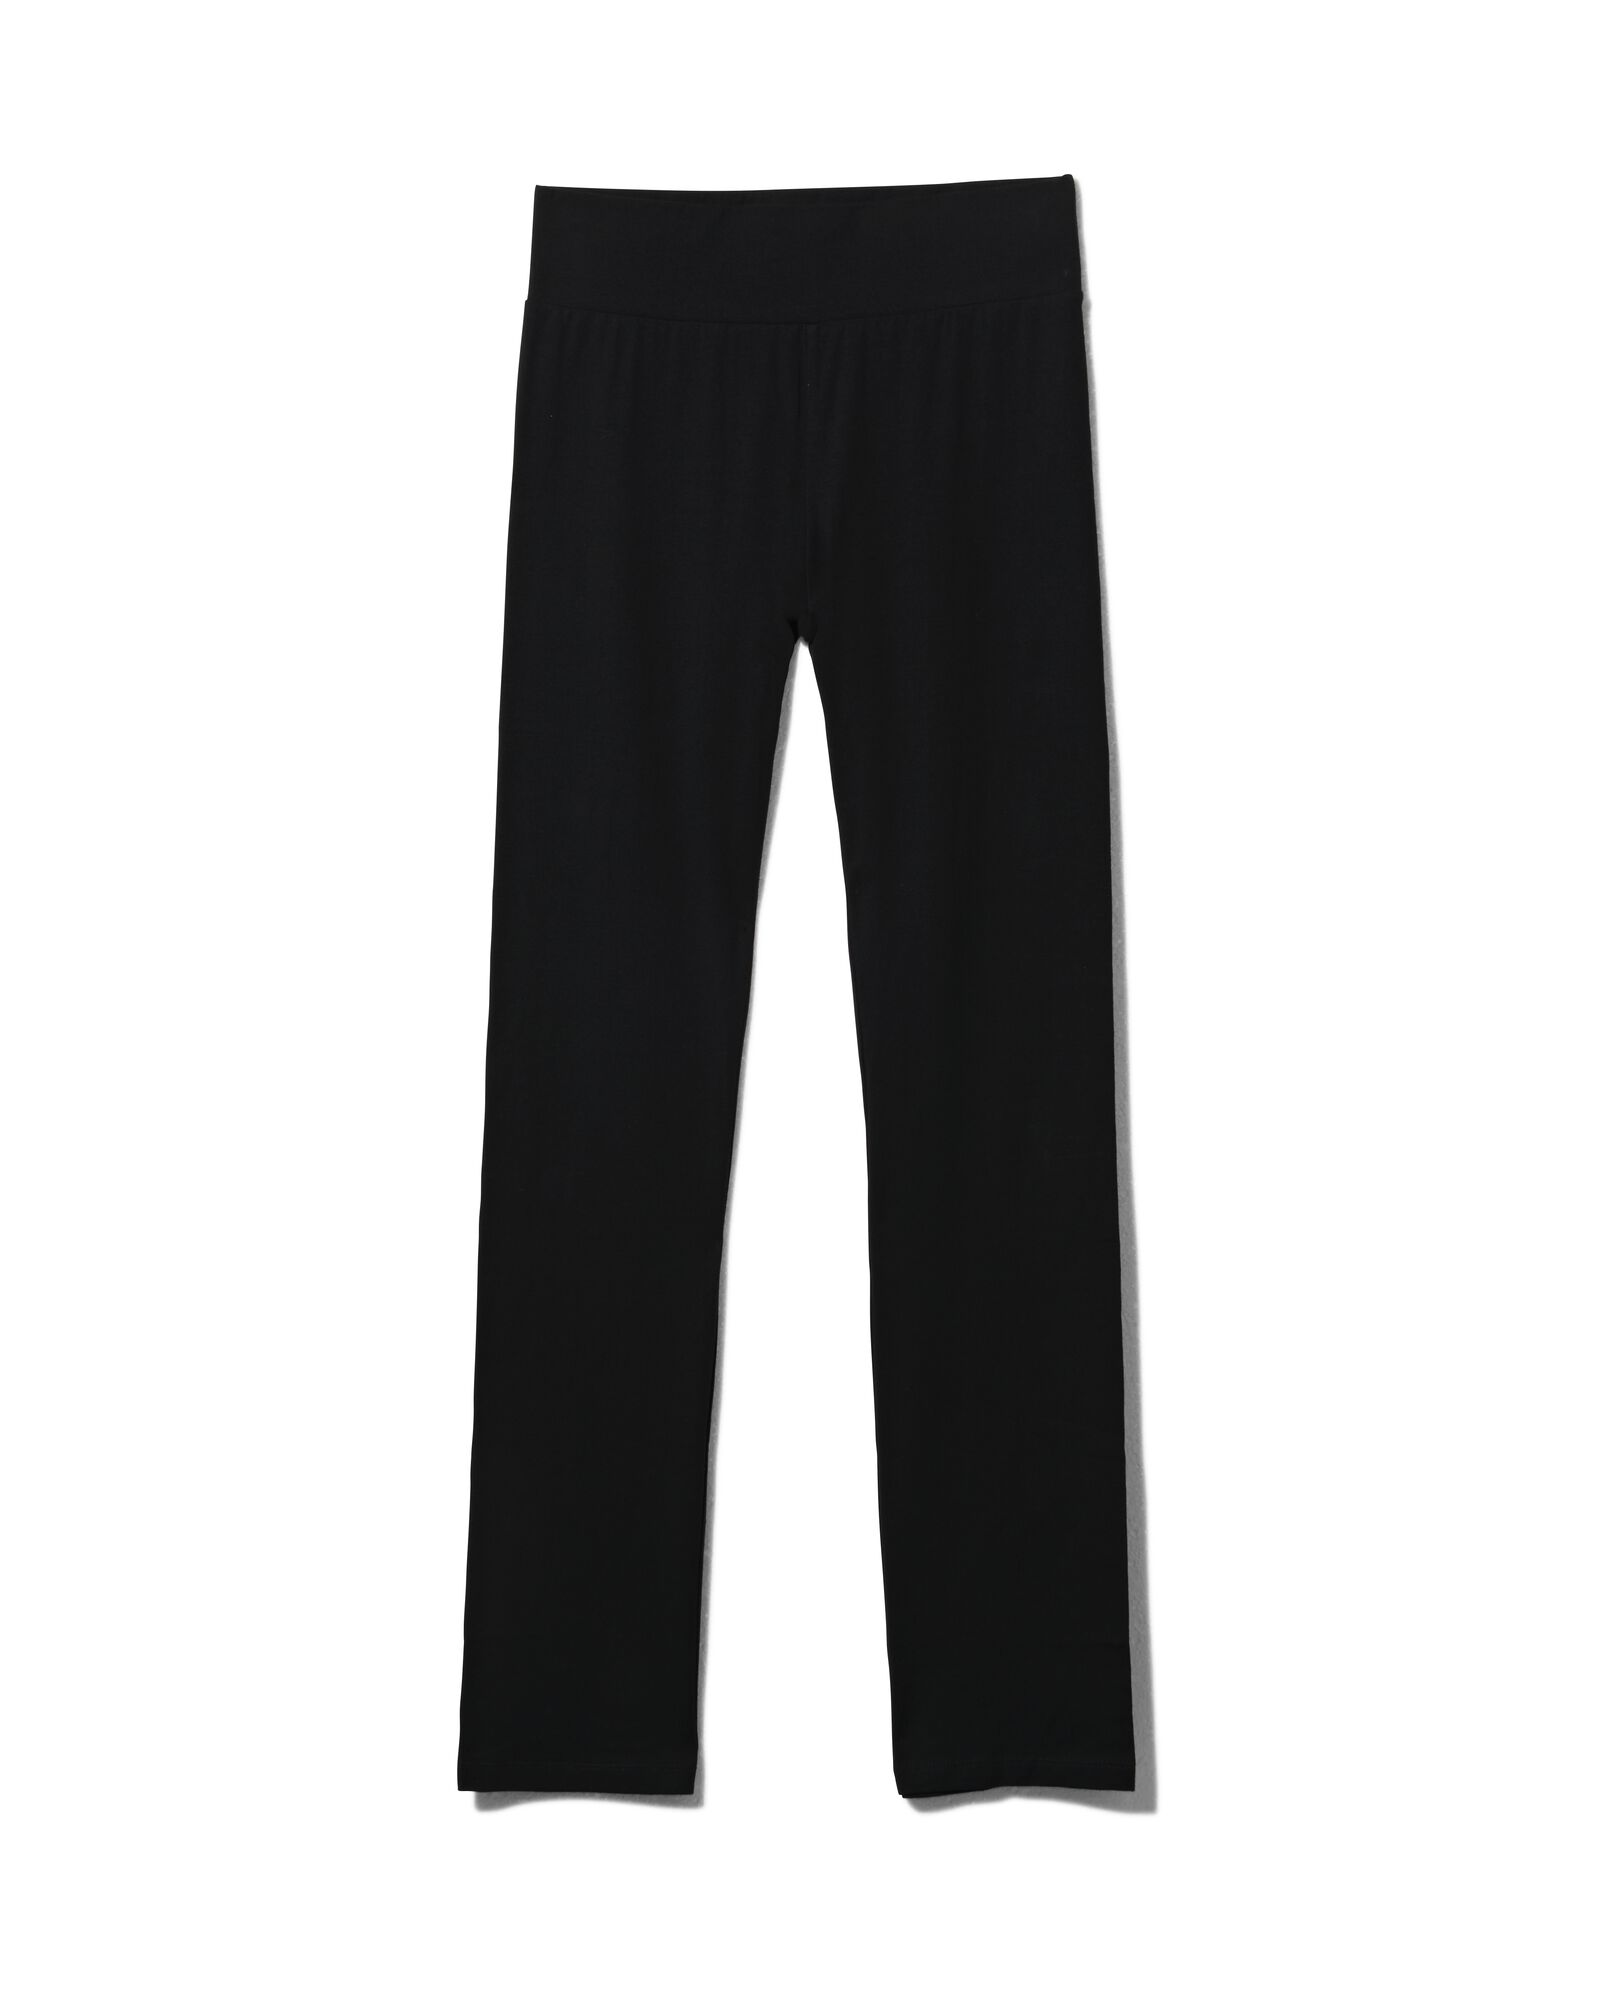 Damen-Yoga-Sporthose schwarz S - 36089301 - HEMA